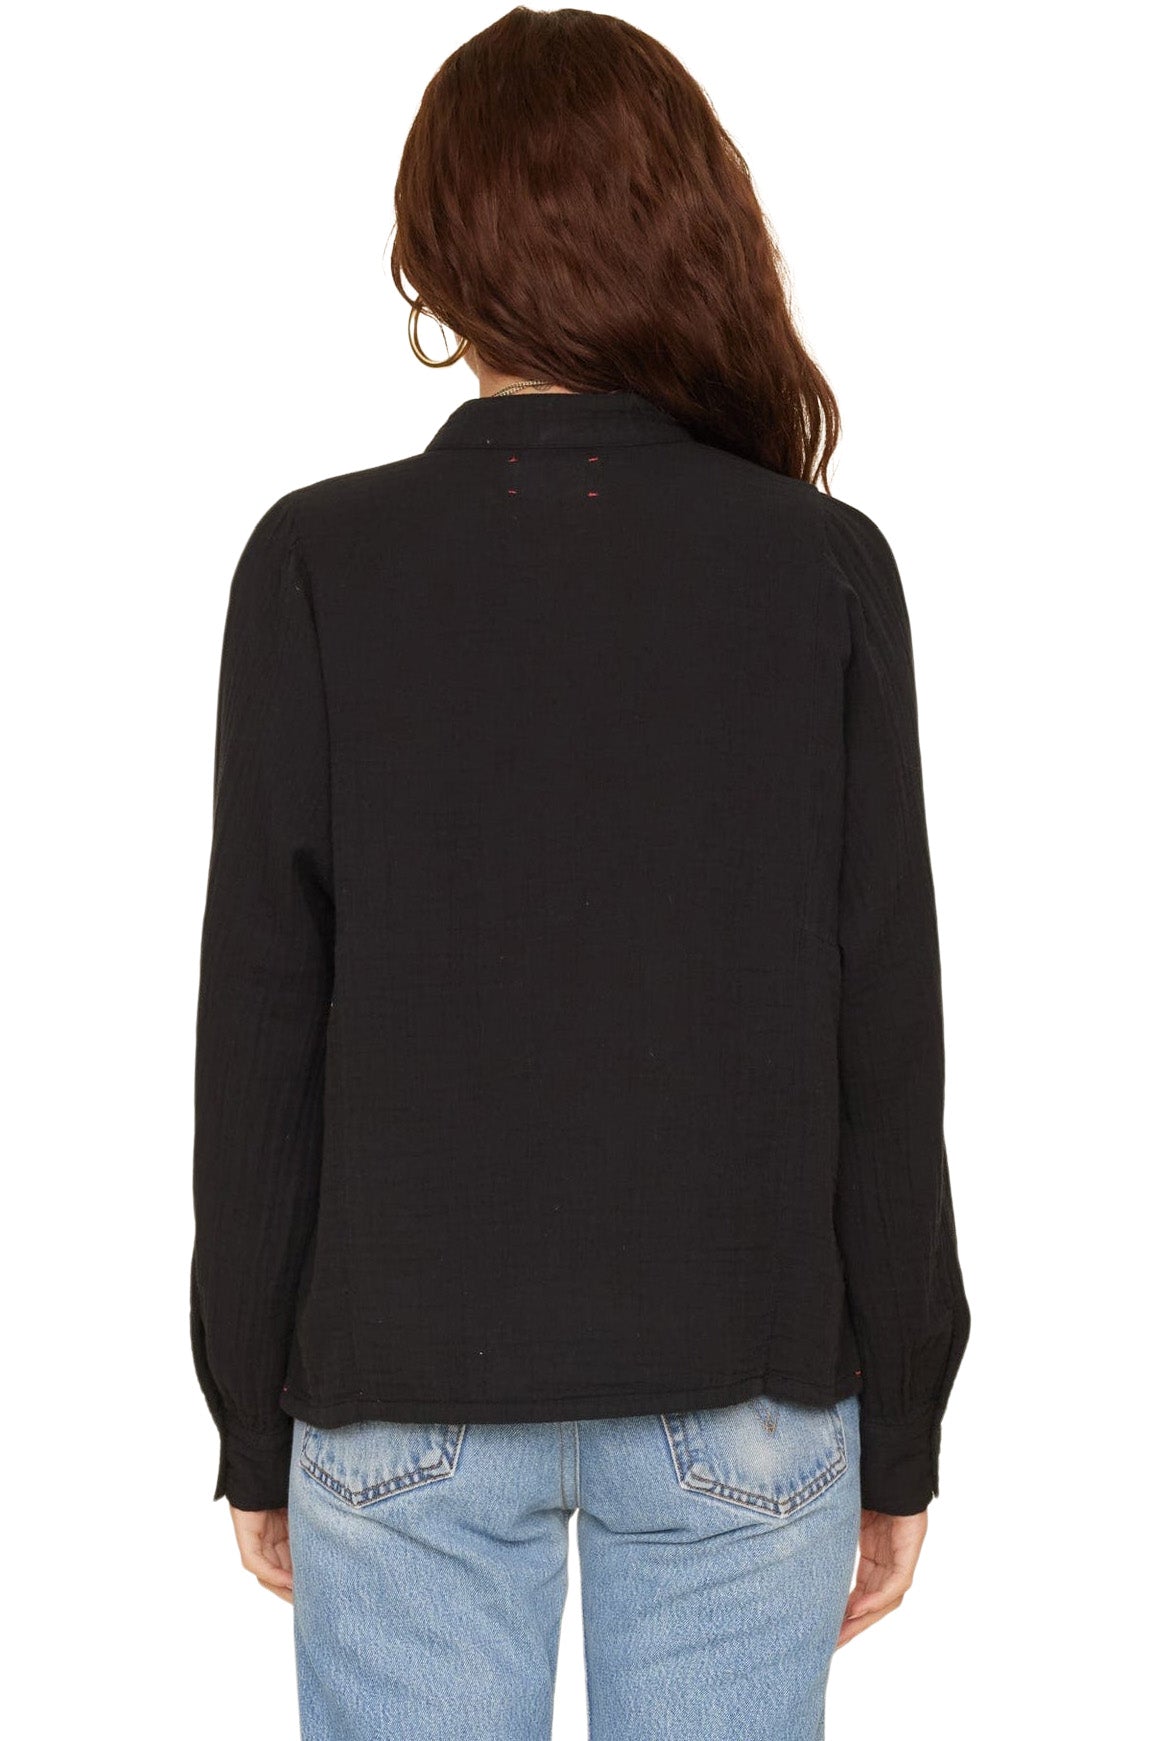 Xirena Gemma Shirt in Black